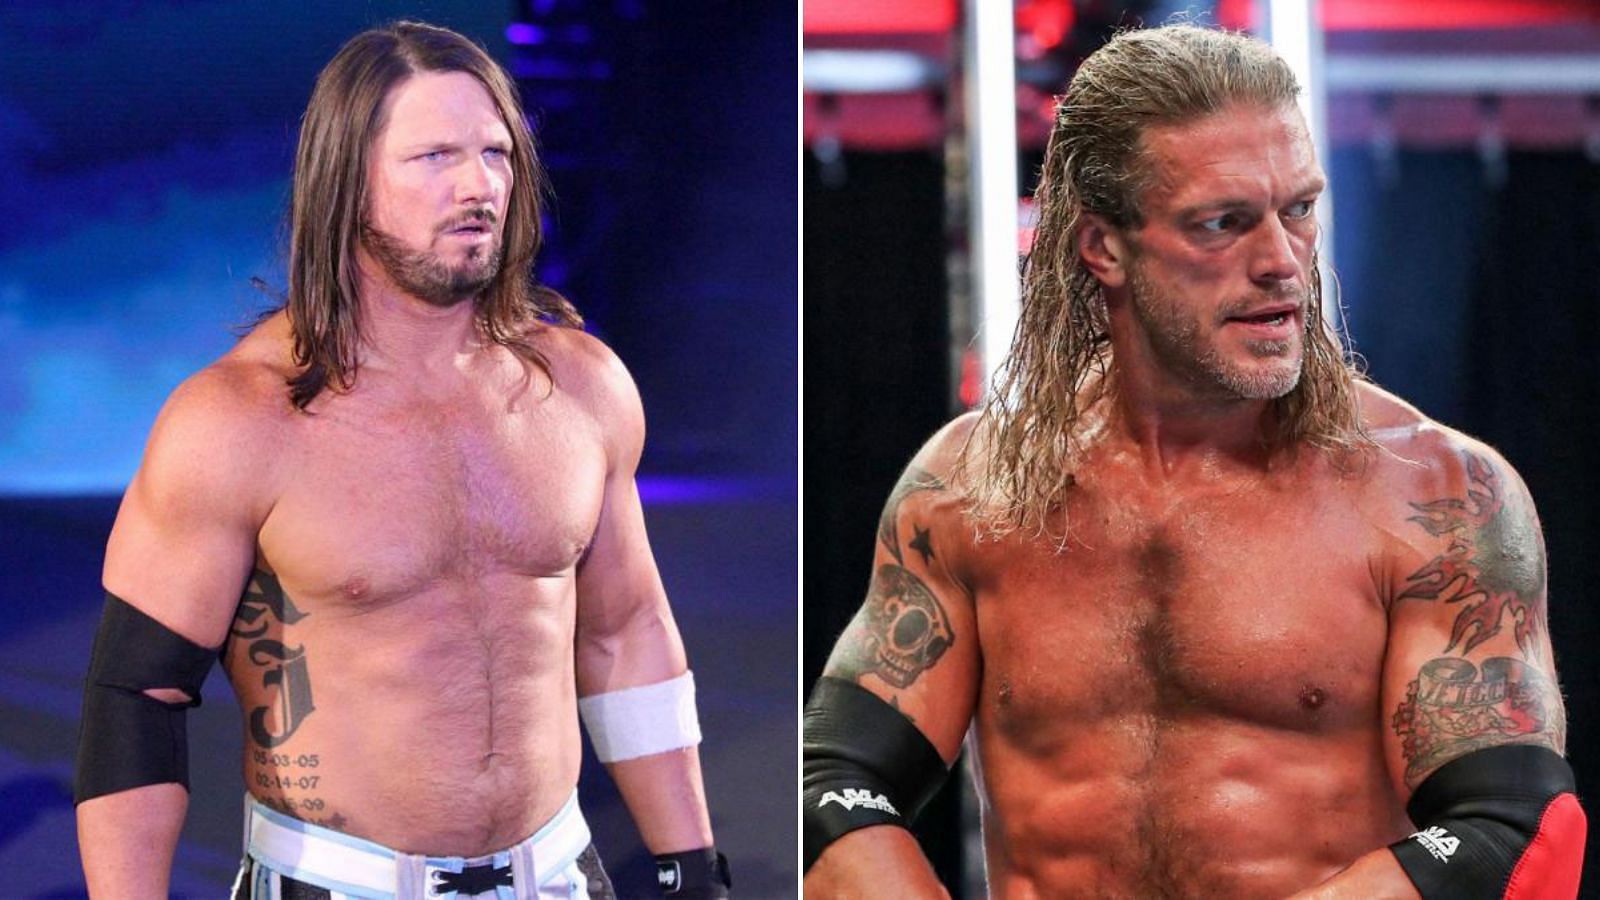 Will we see AJ Styles vs. Edge at WrestleMania?